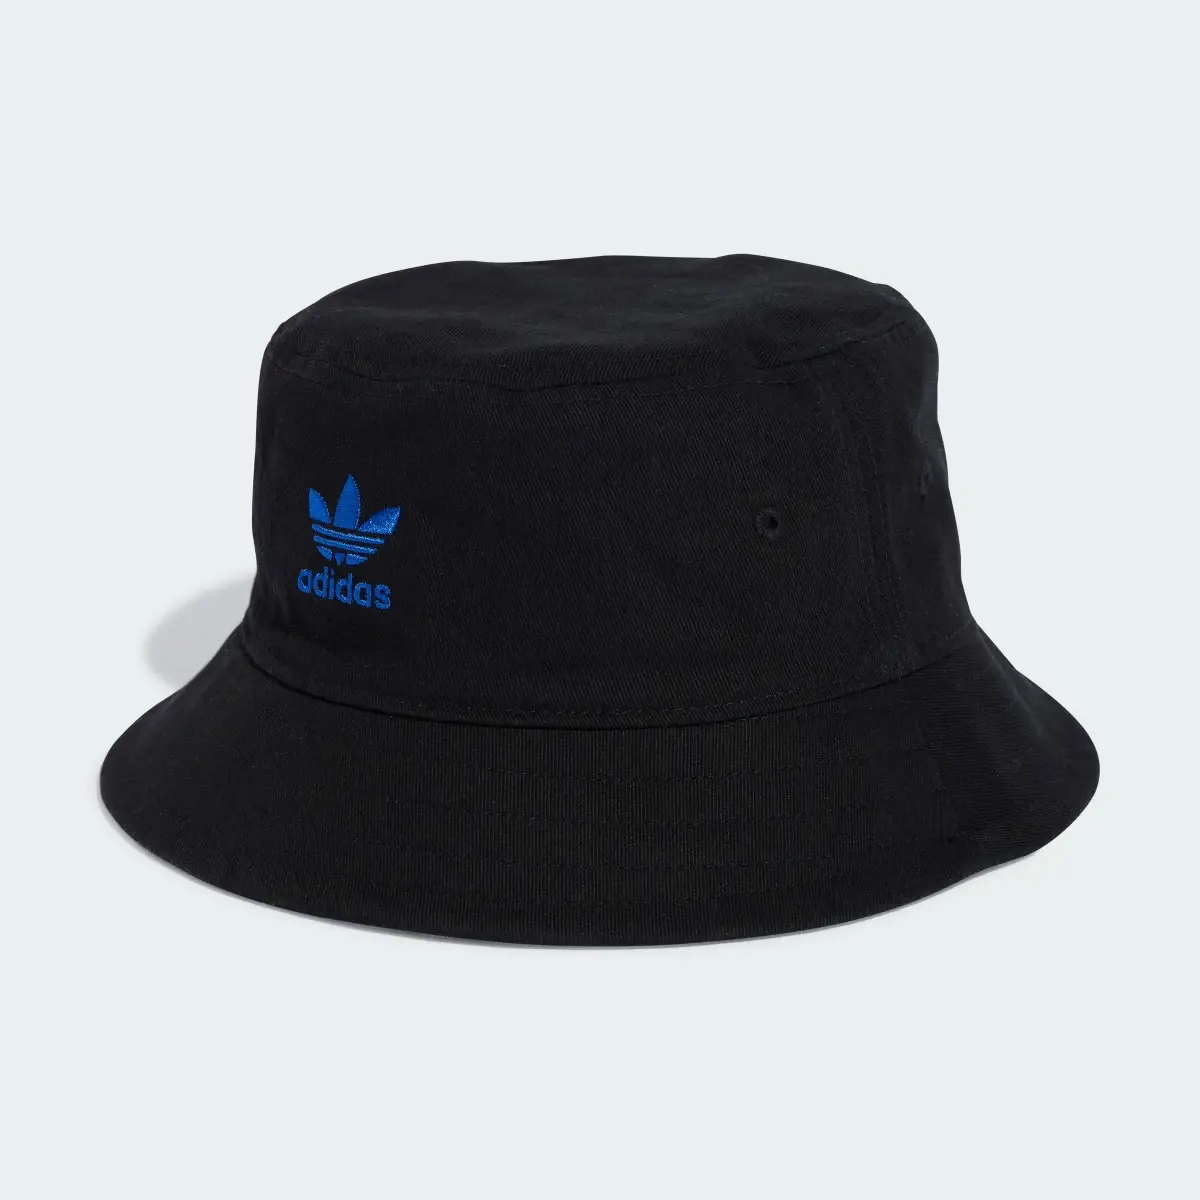 Adidas Originals x Mark Gonzales Bucket Hat. 3